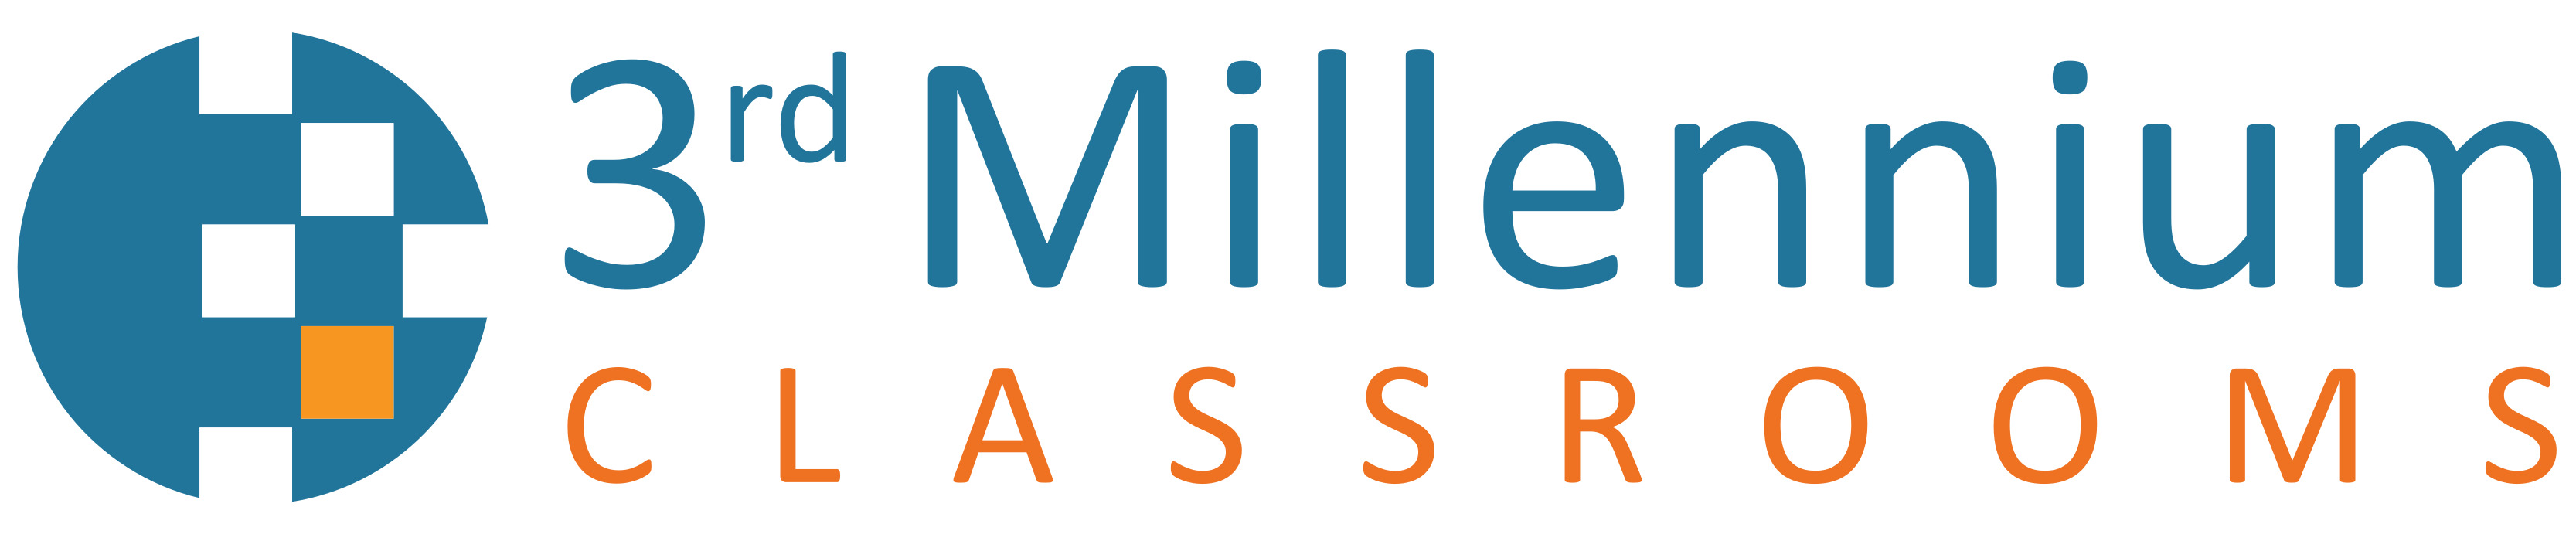 3rd Millennium Classrooms's Logo